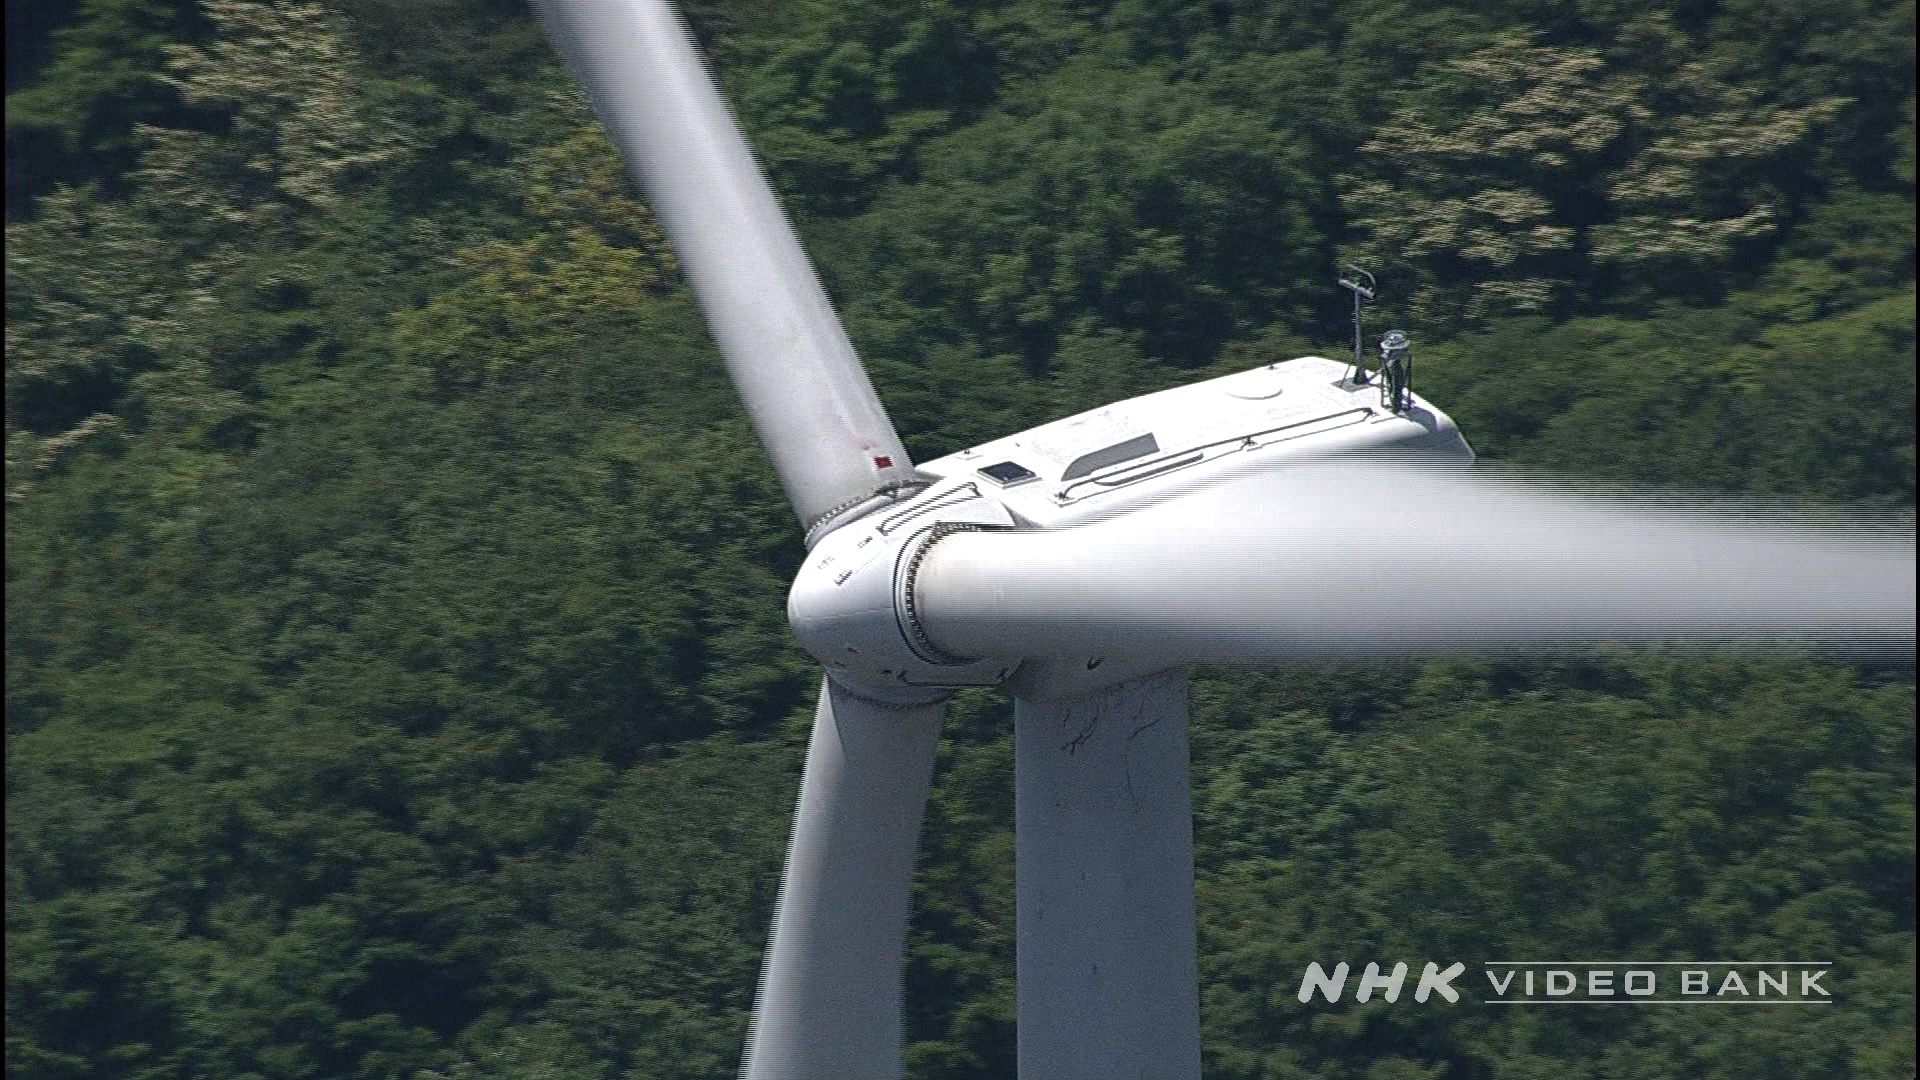 Alternative Energy Source: wind power